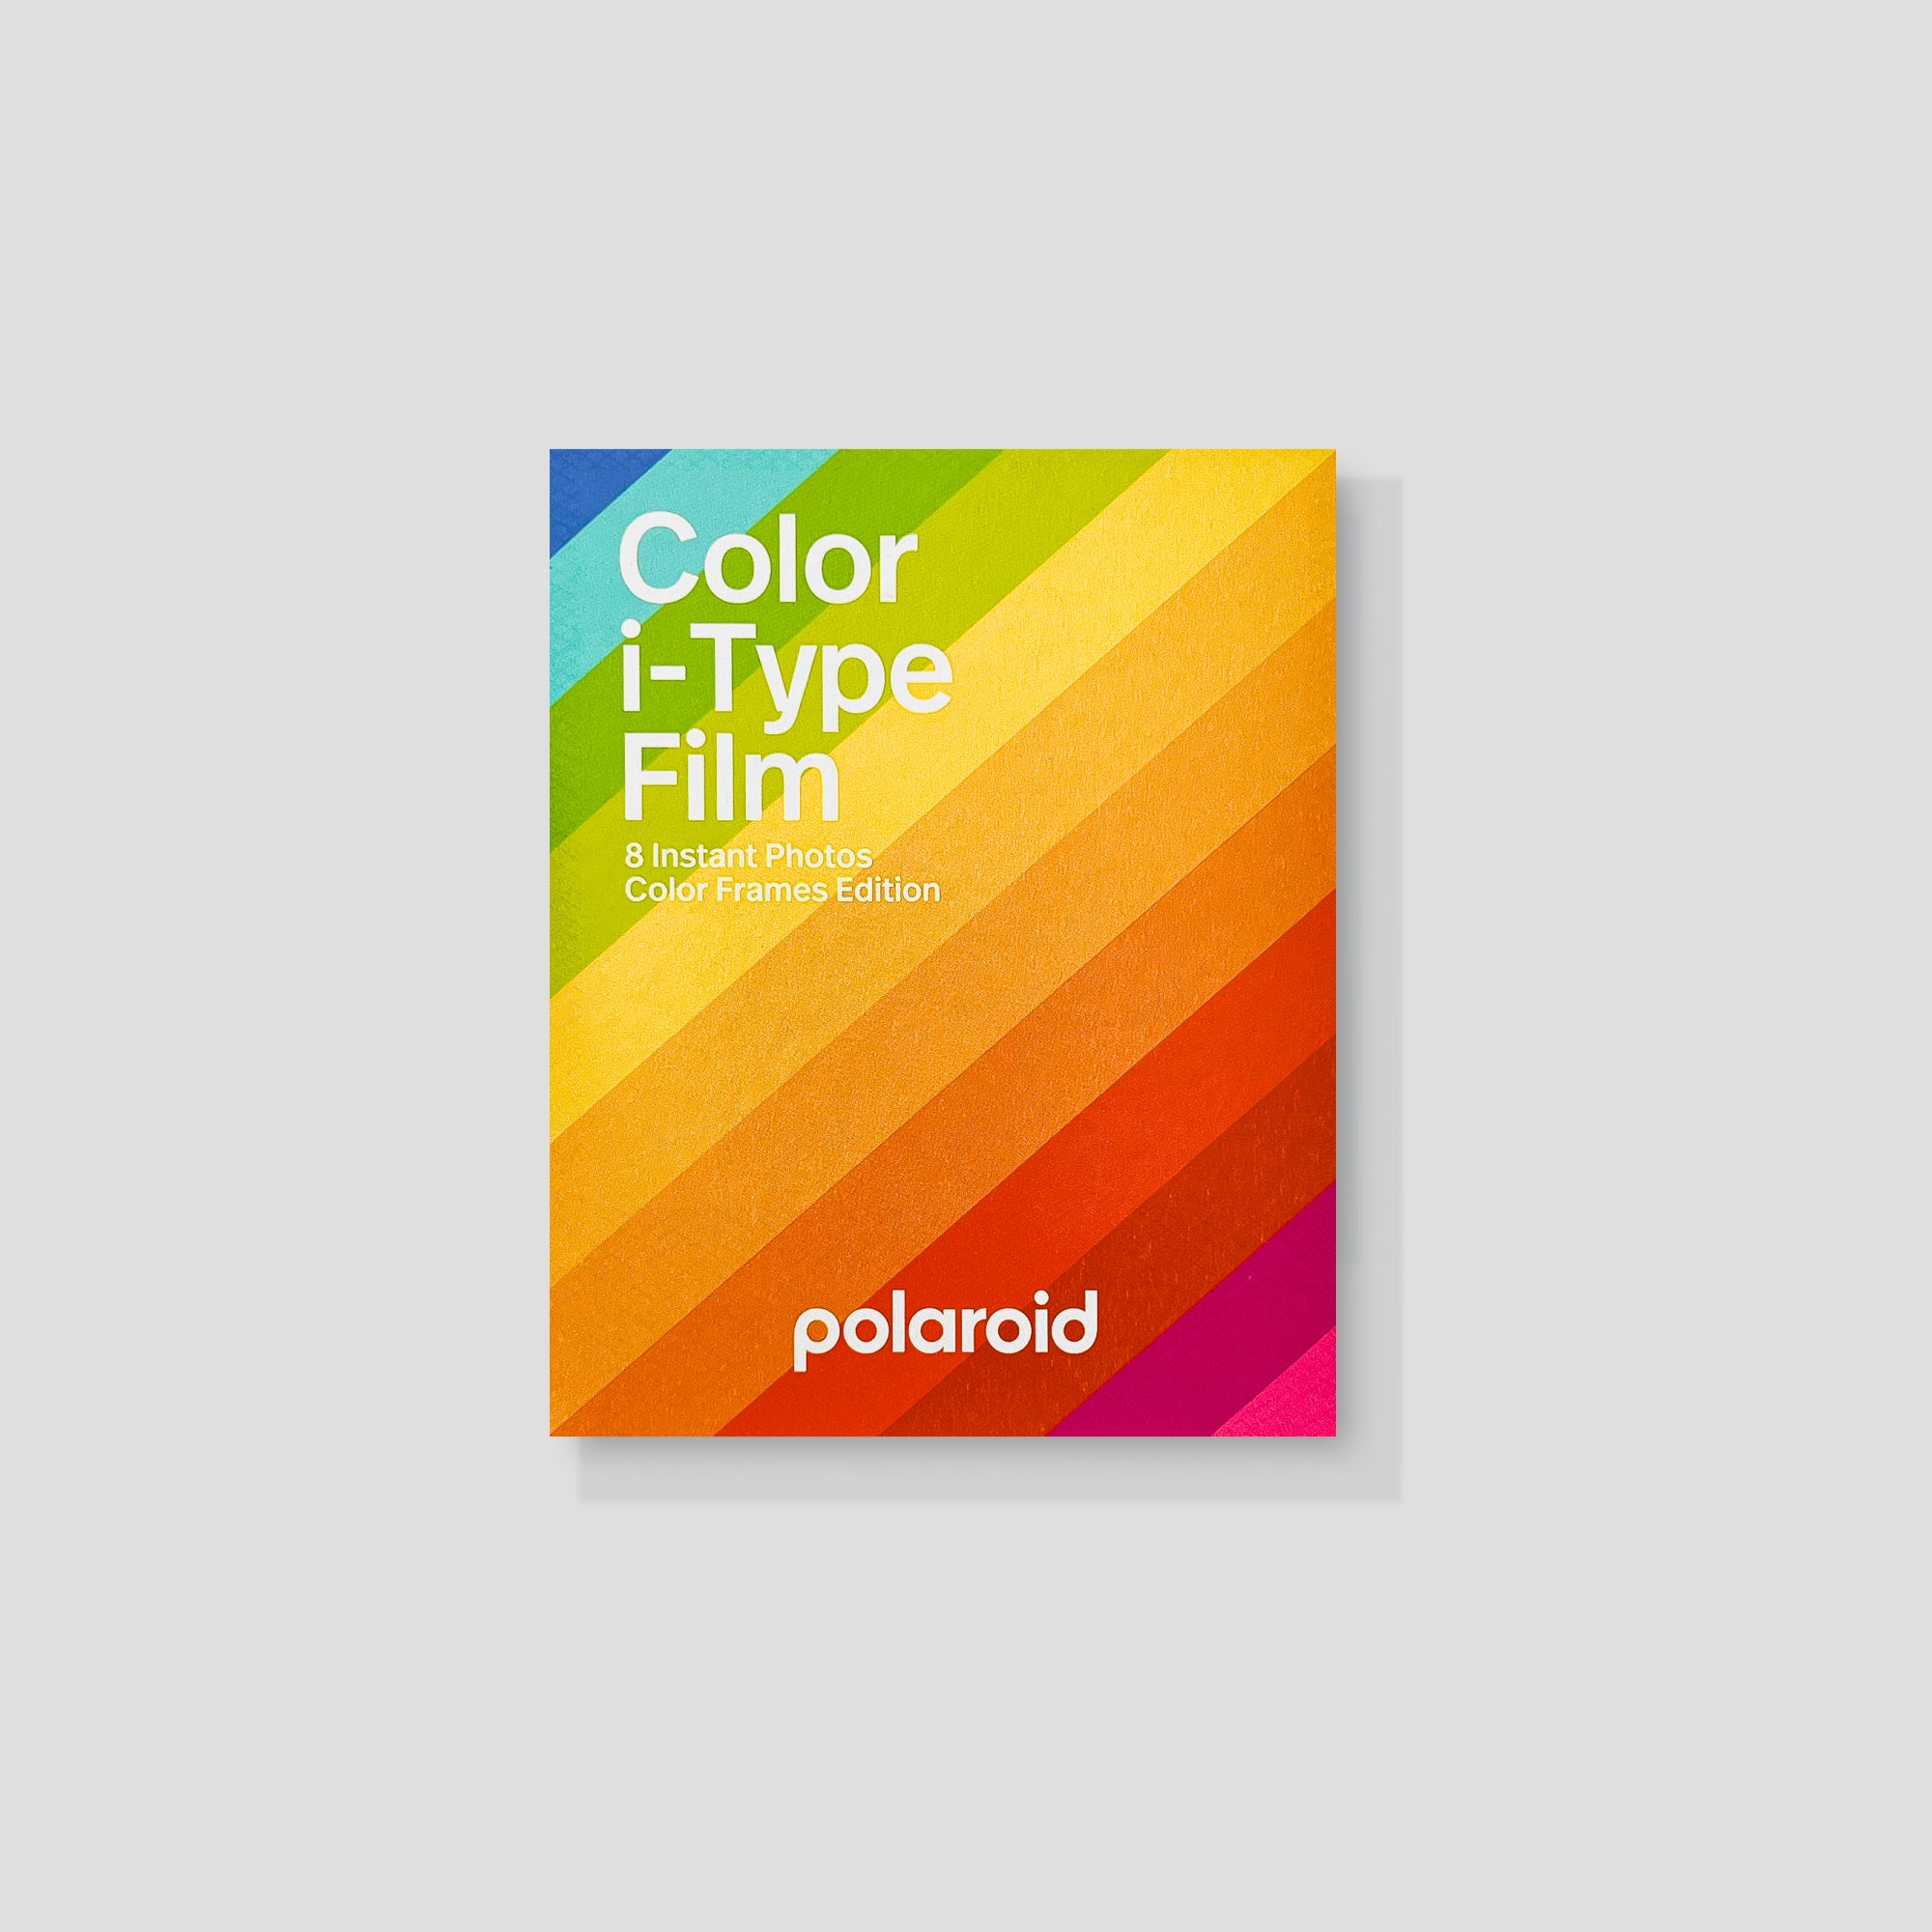 Polaroid Color i Type Film - Color Frames Edition